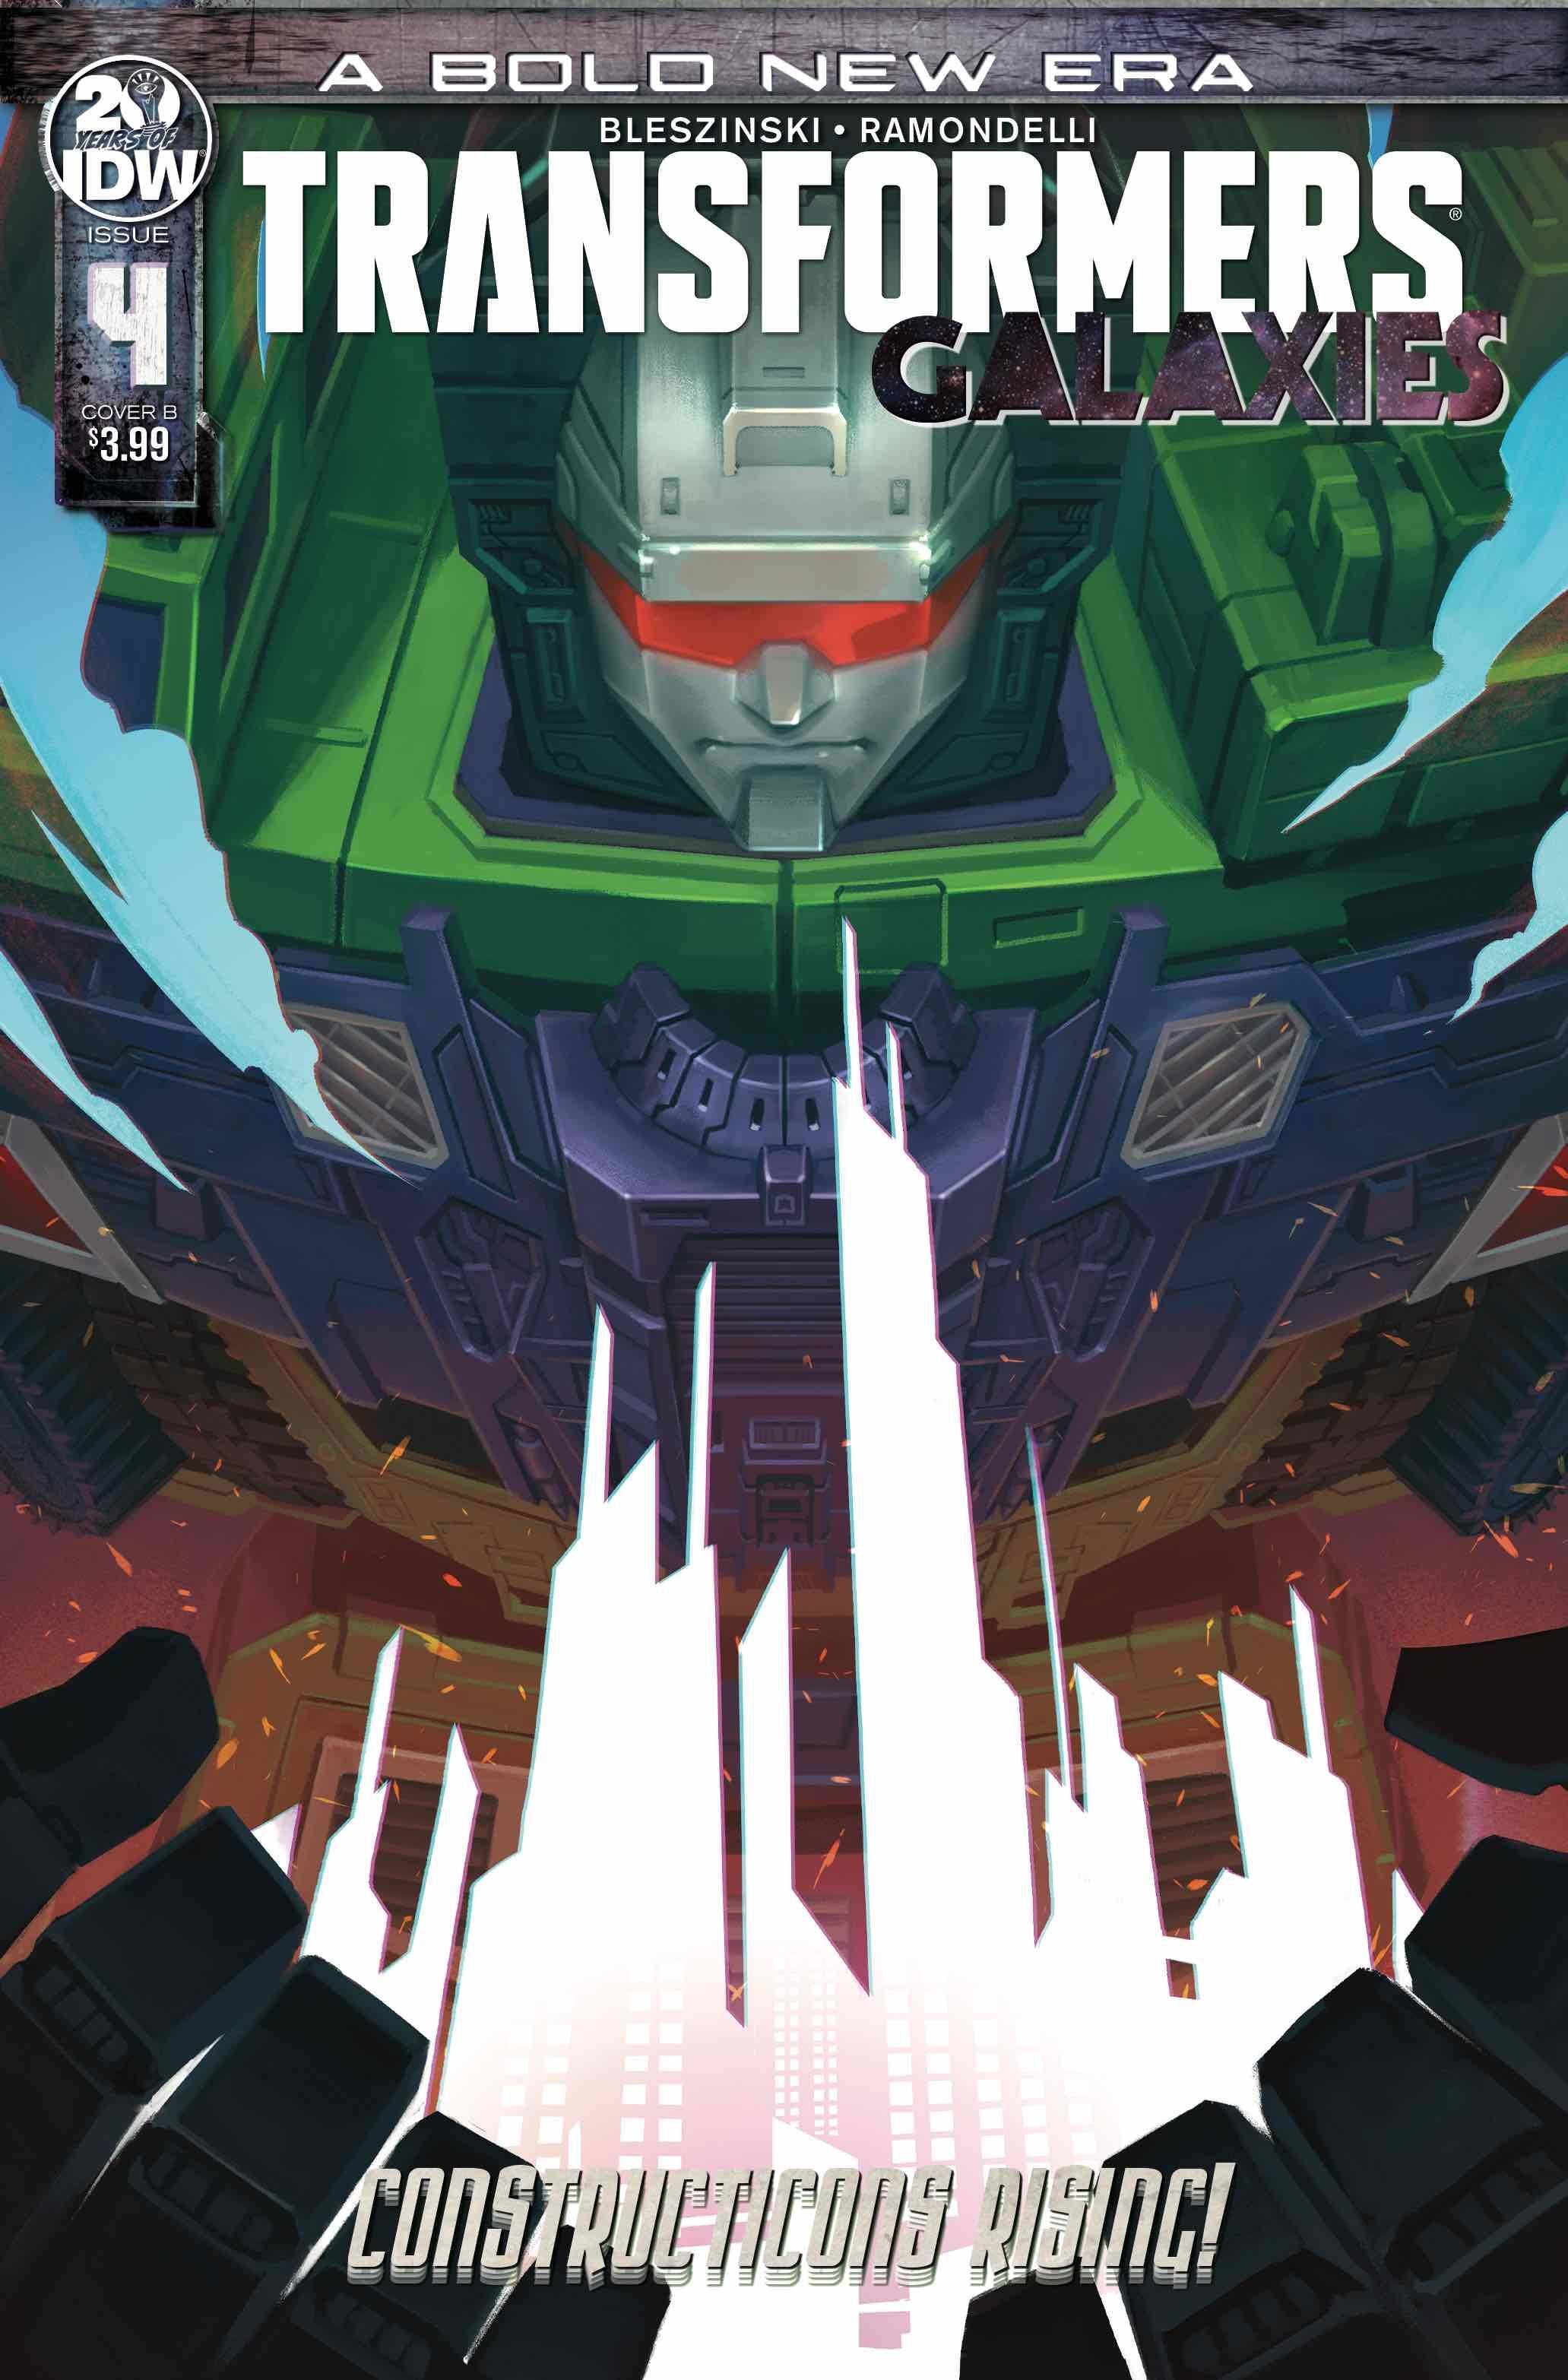 Transformers Galaxies #4 Cover B Pitre-Durocher